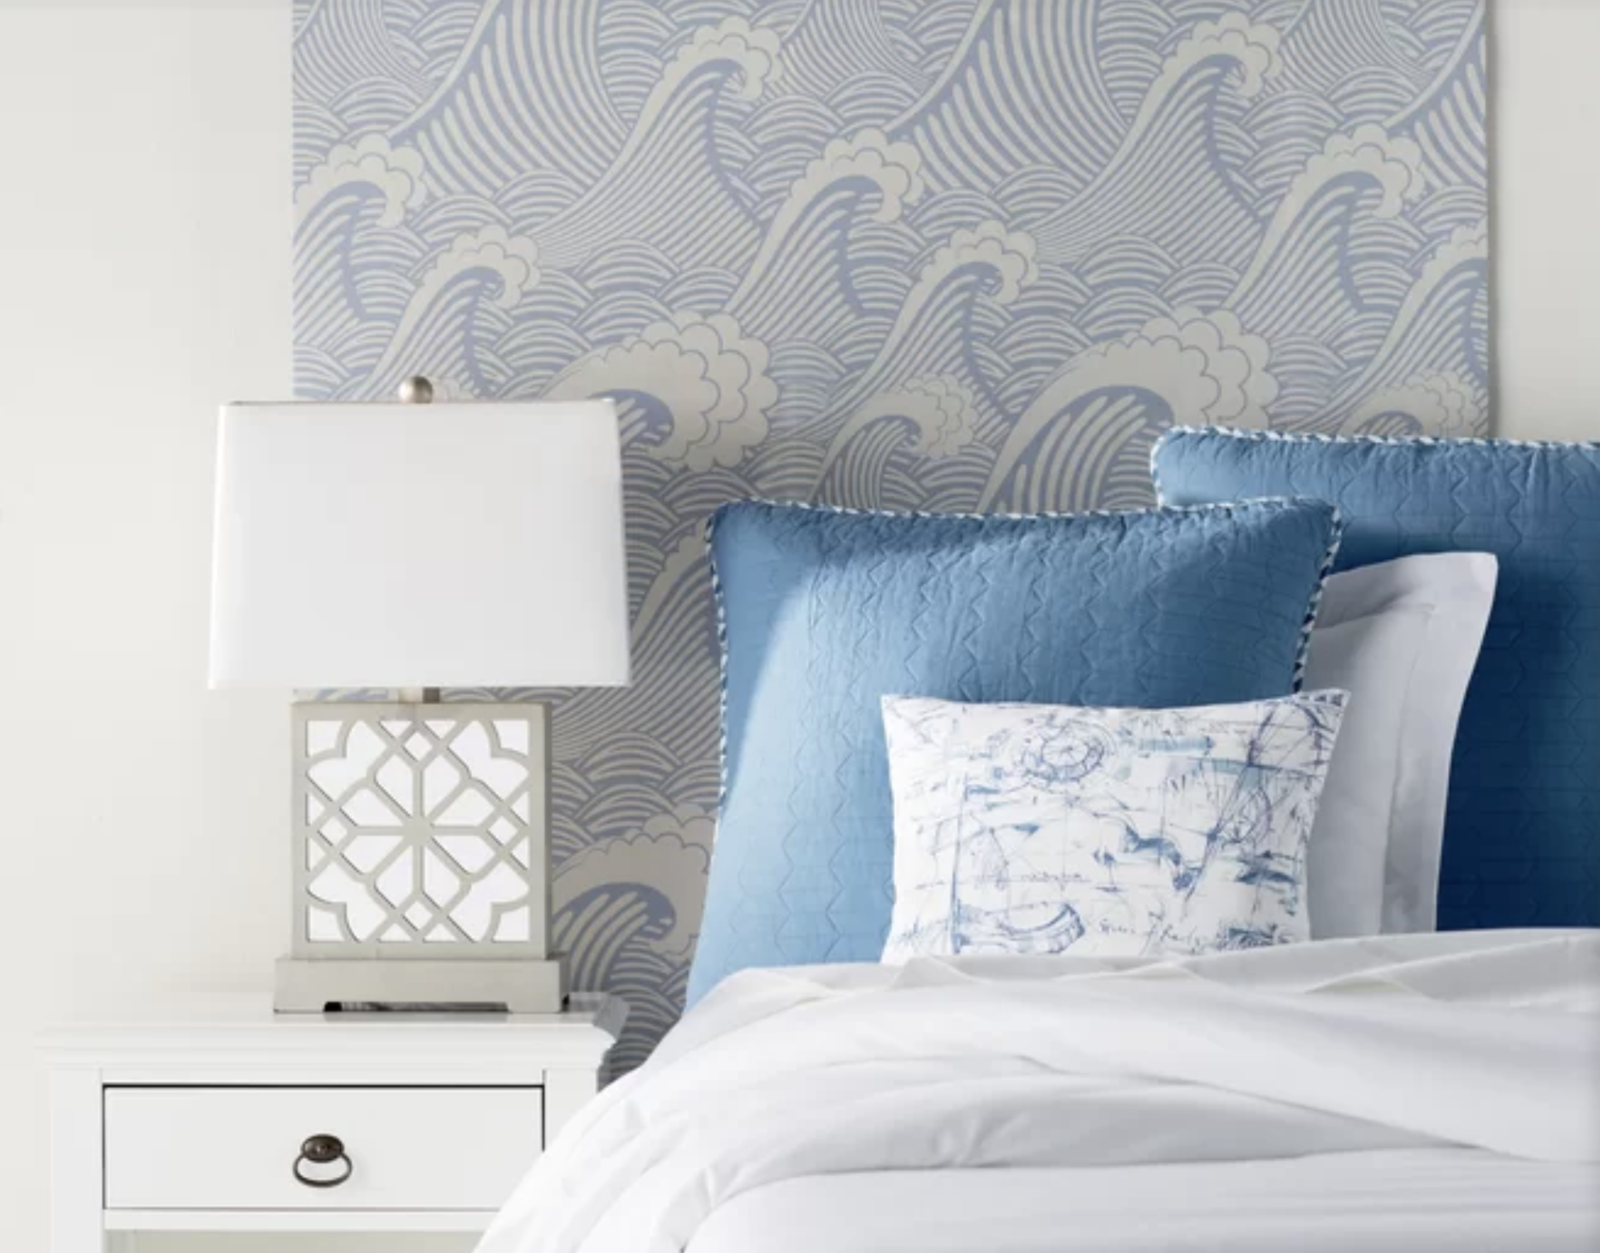 wave-patterned wallpaper in a bedroom